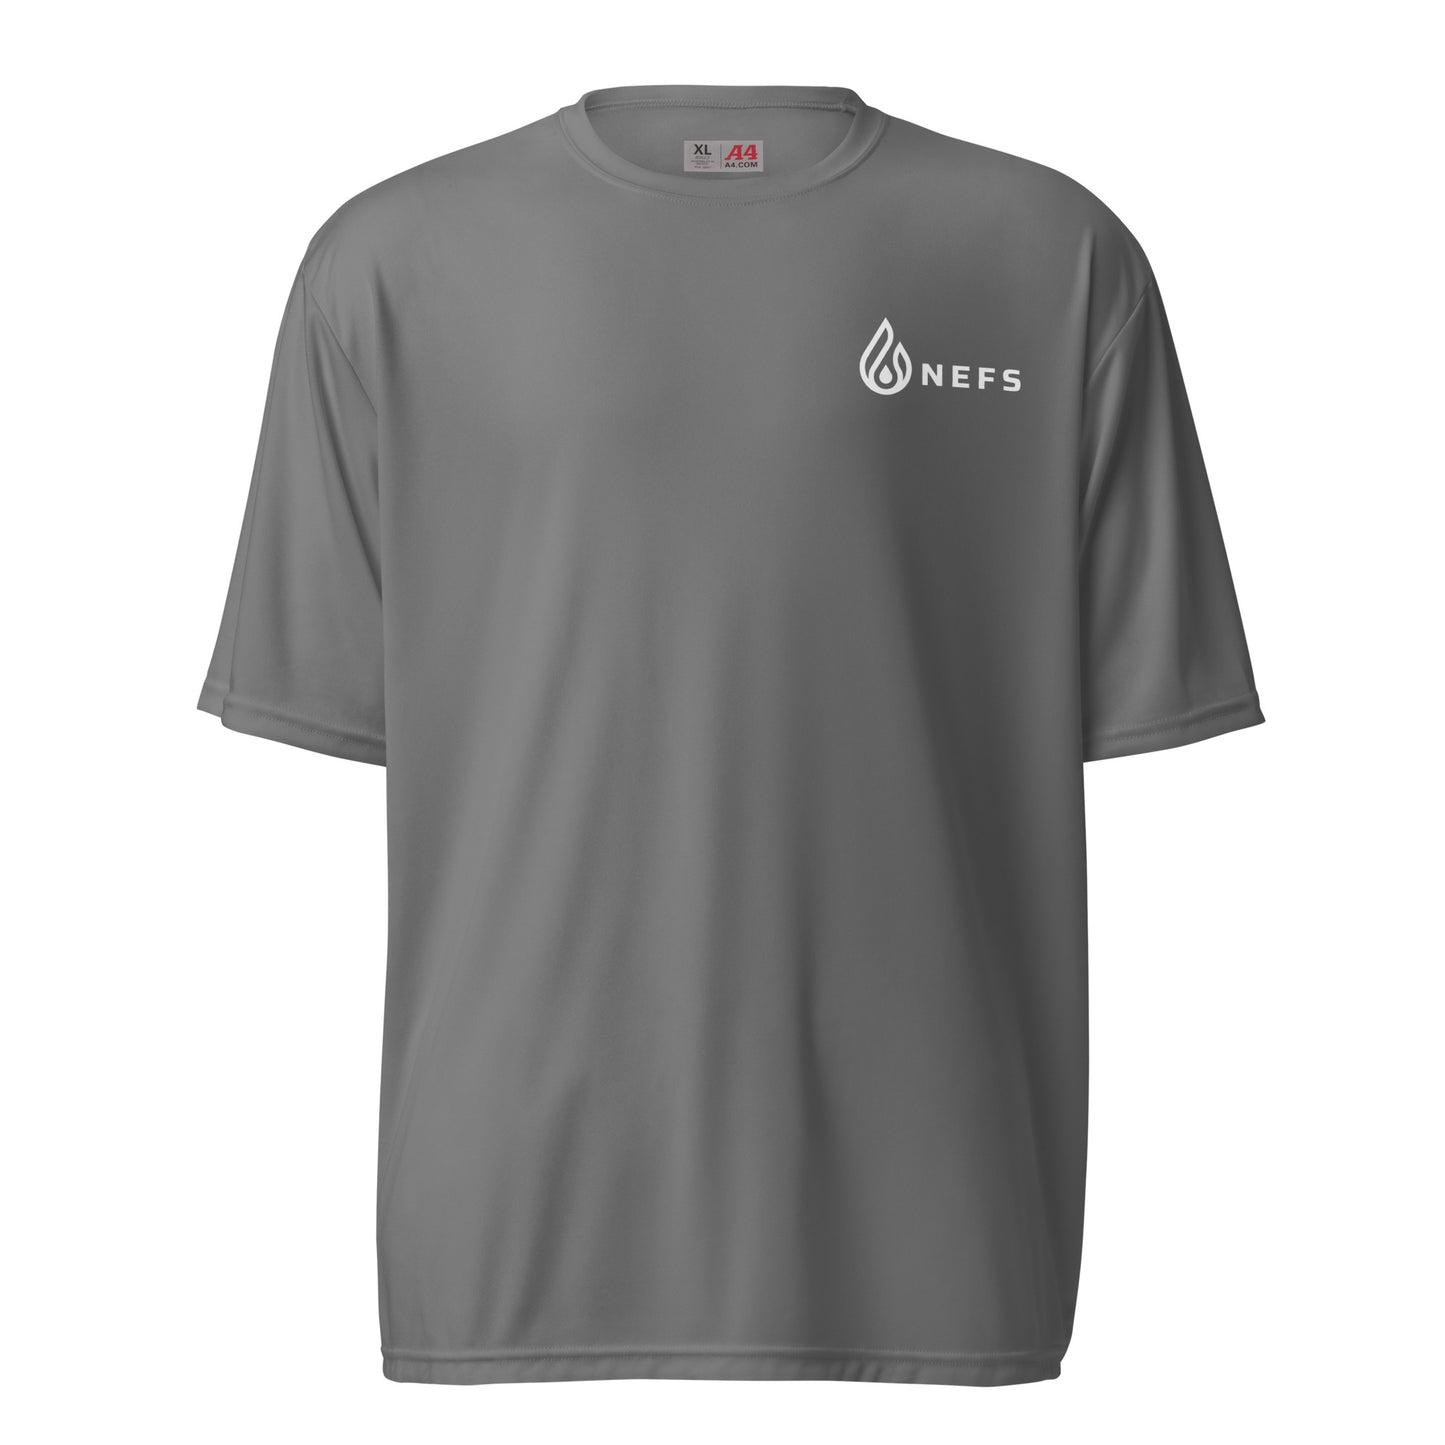 Unisex performance t-shirt